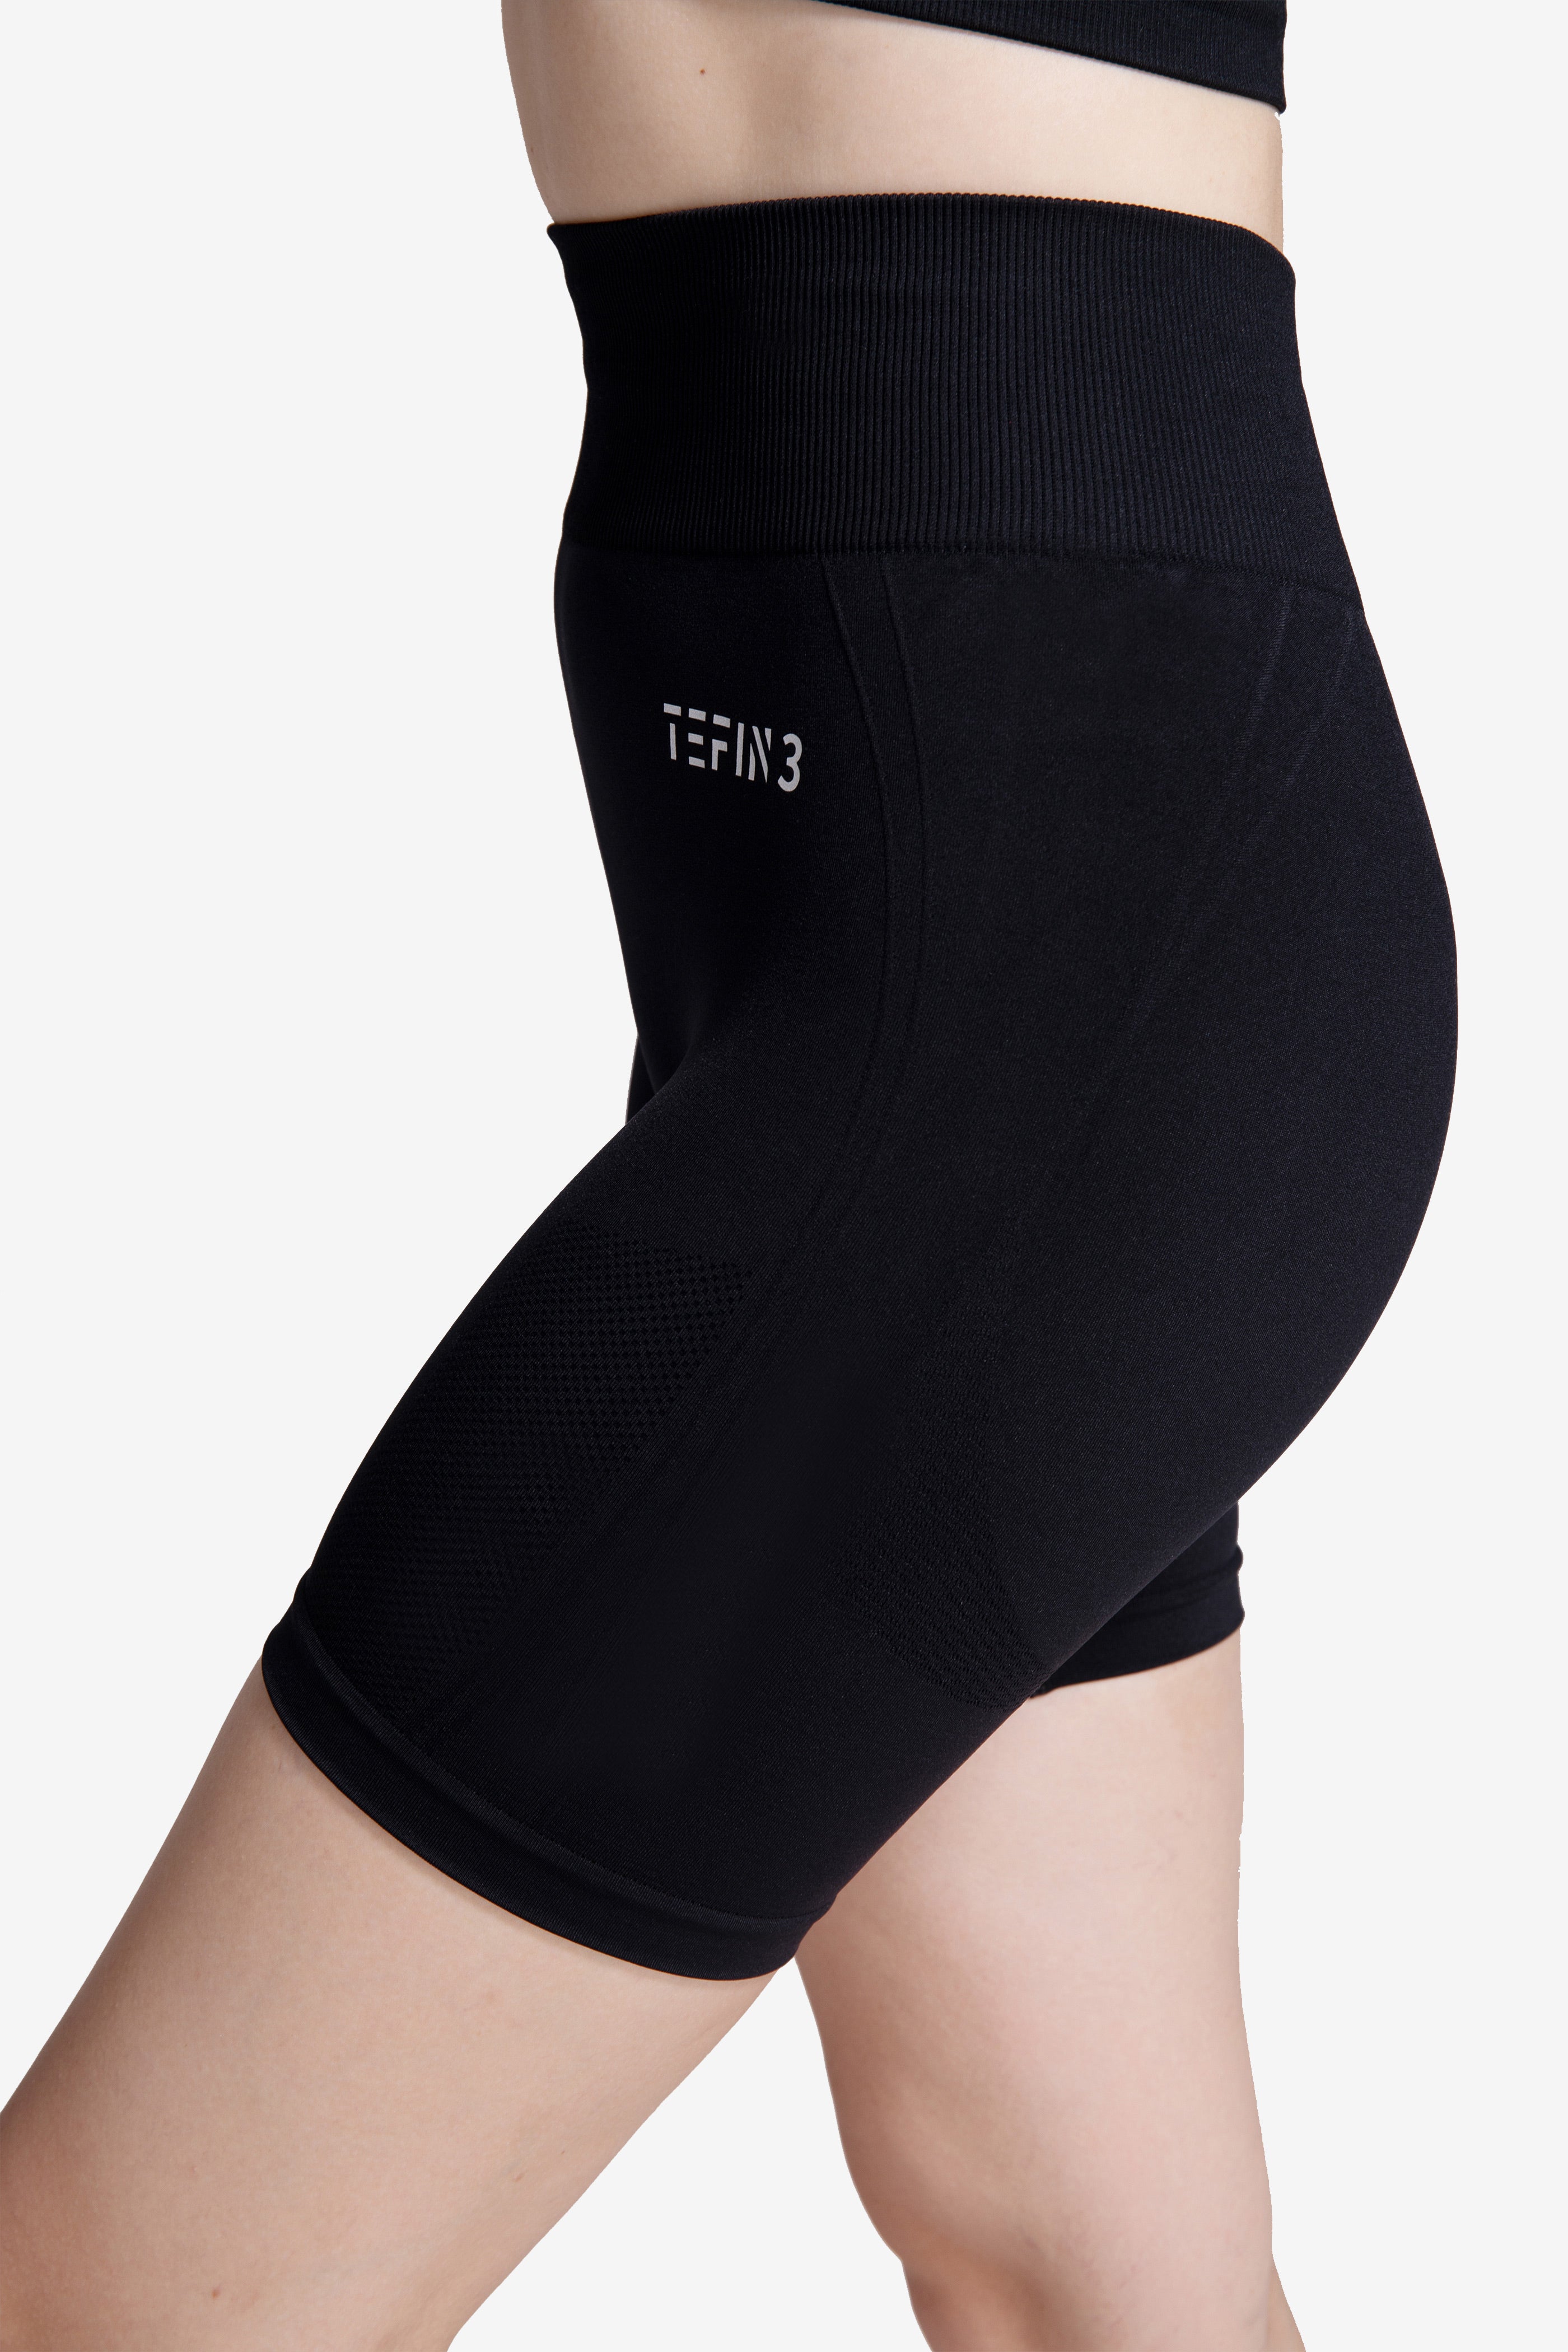 TEFIN3 Comfy Seamless Women Workout Shorts Black